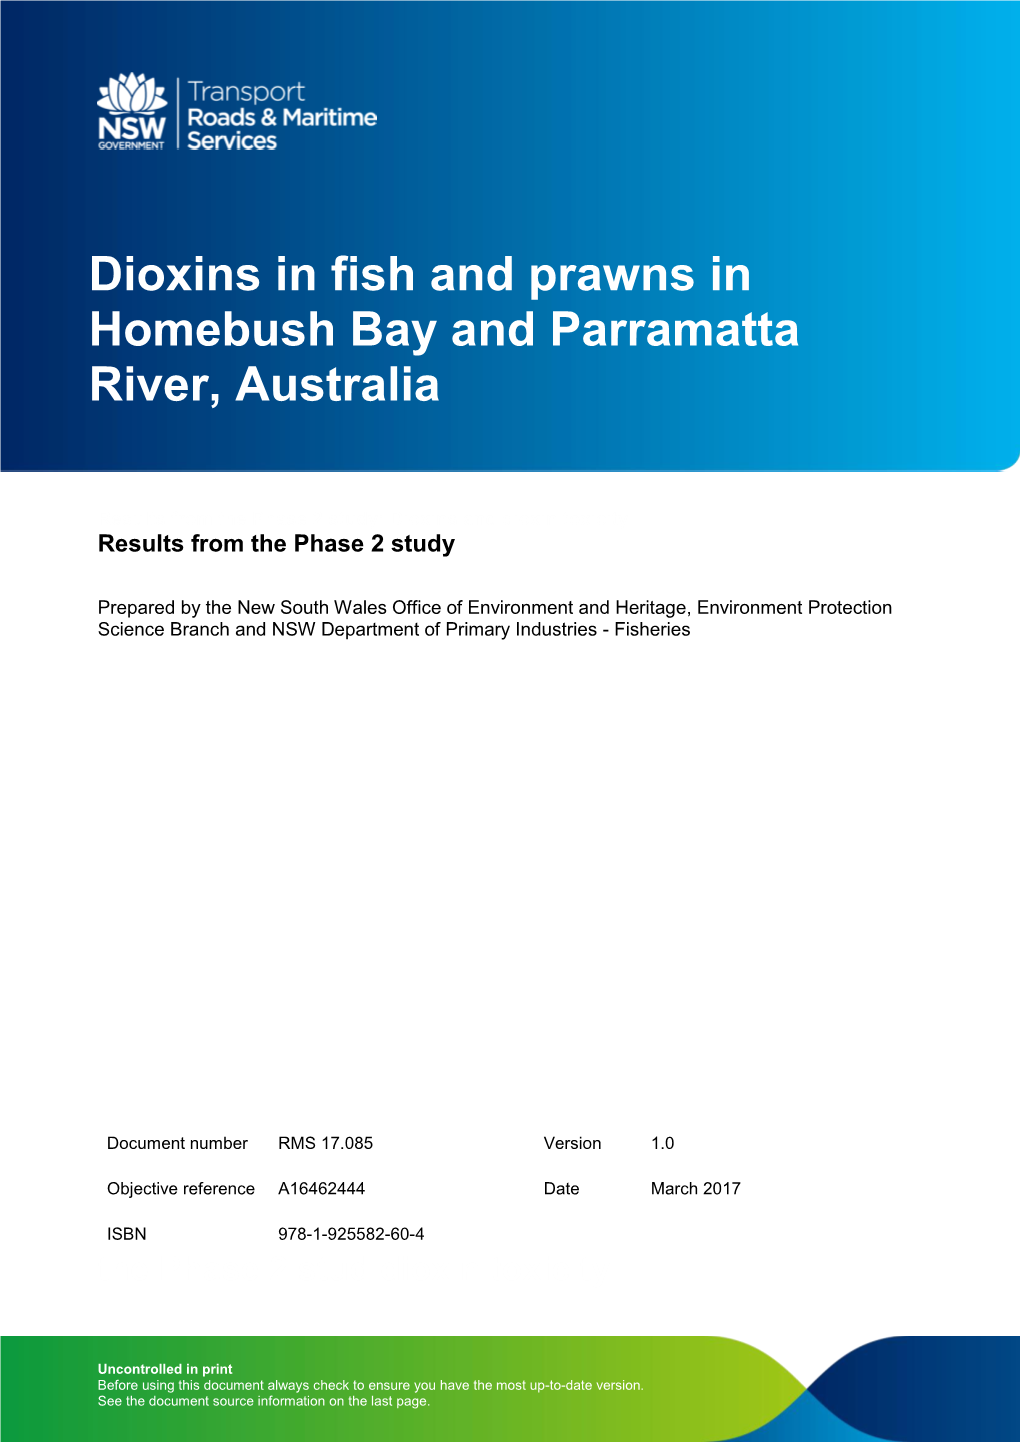 Dioxins in Fish and Prawns in Homebush Bay and Parramatta River, Australia